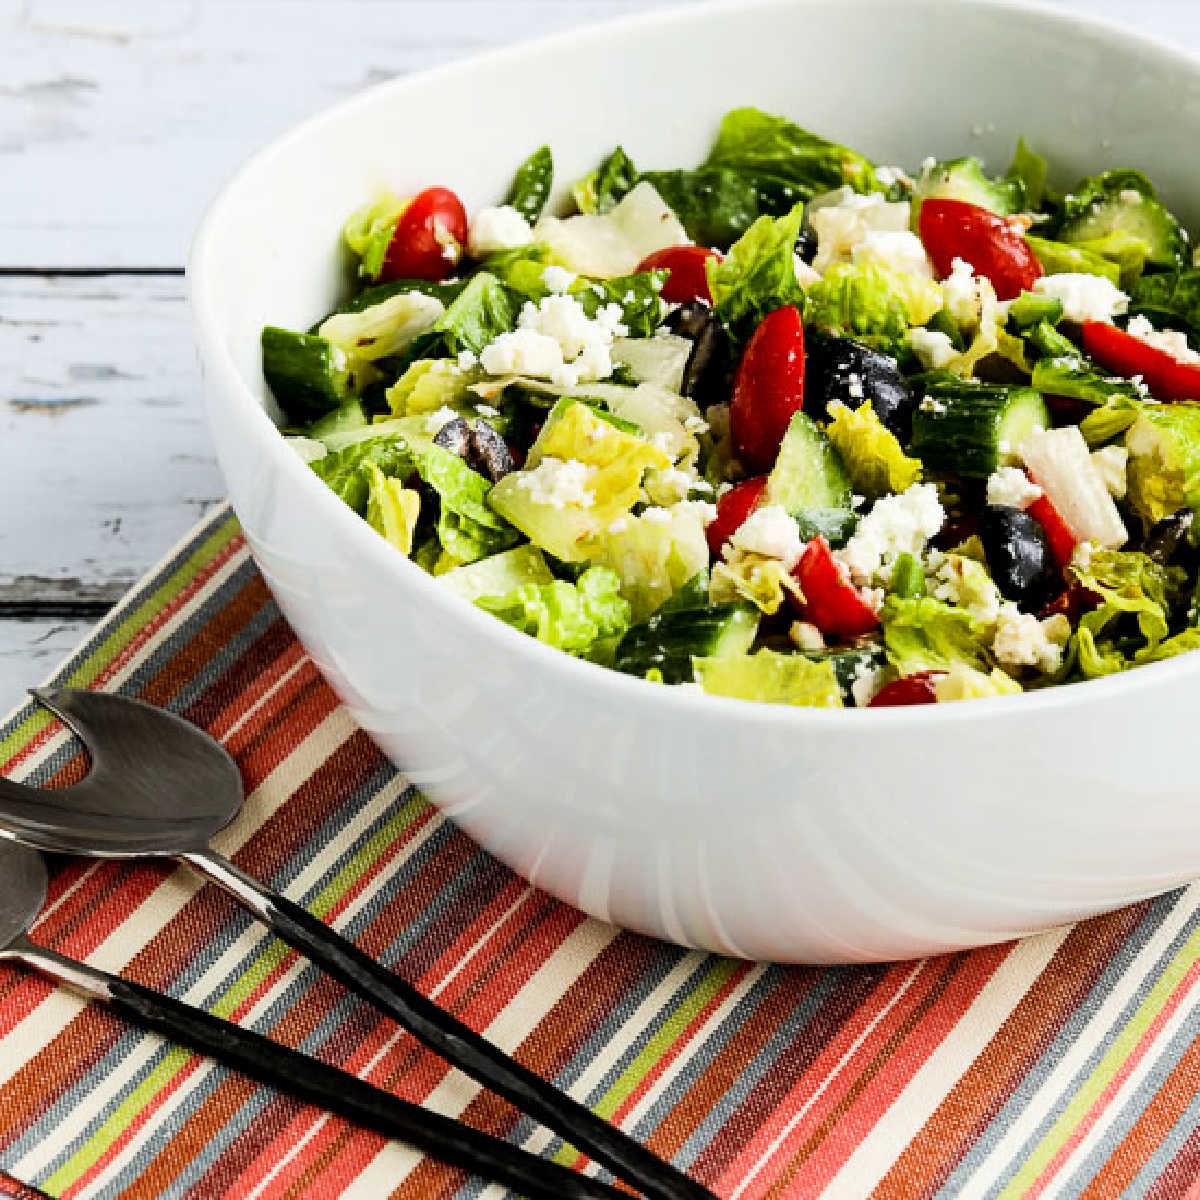 Greek Salad with Lettuce shown in serving bowl with salad forks.